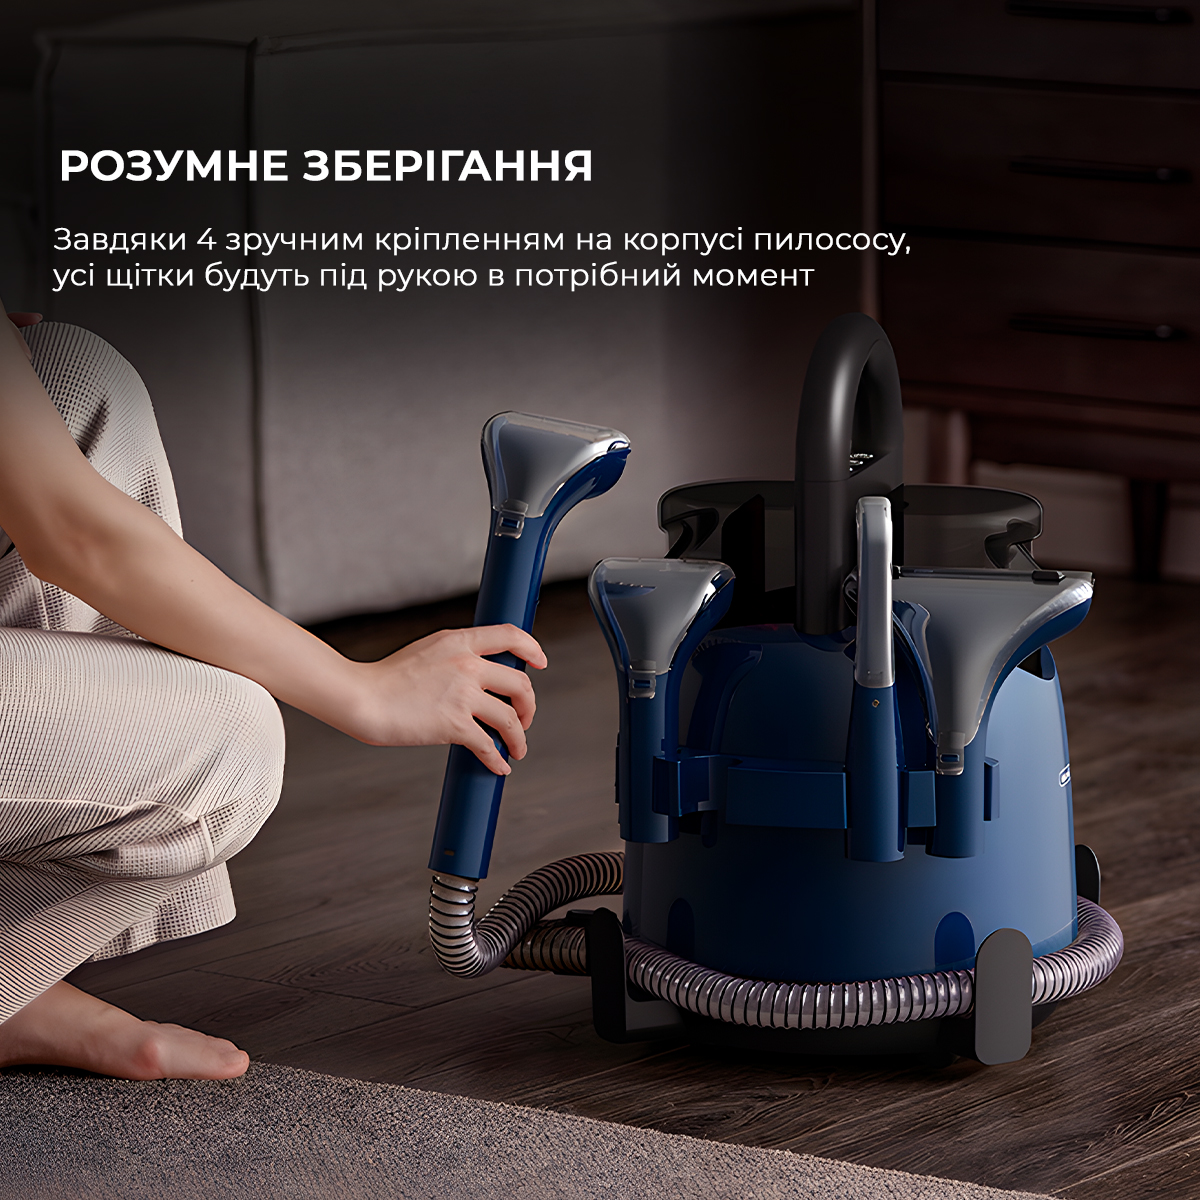 Пилосос Deerma Suction Vacuum Cleaner (DEM-BY200) огляд - фото 8